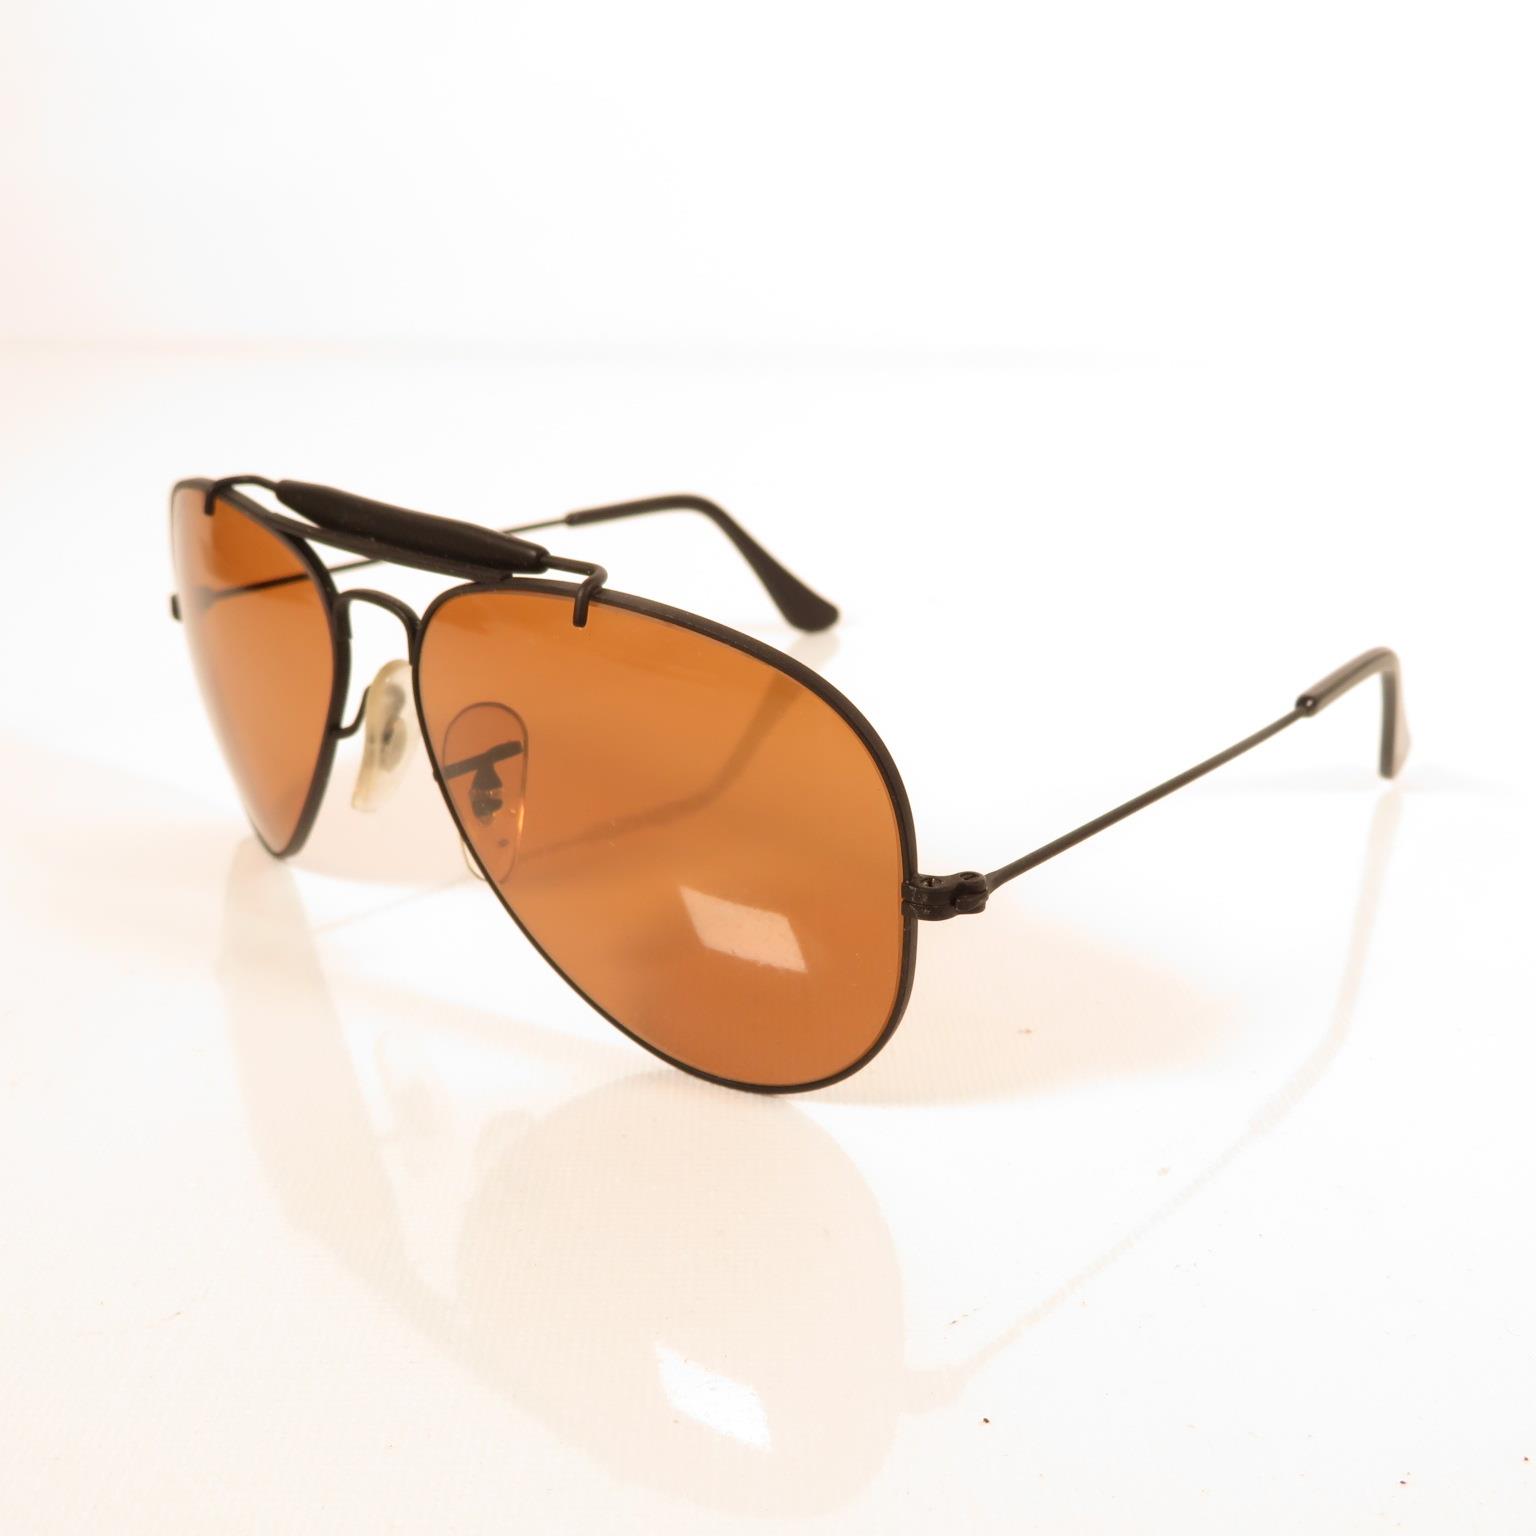 5x sets Ray Ban sunglasses - - Image 13 of 24